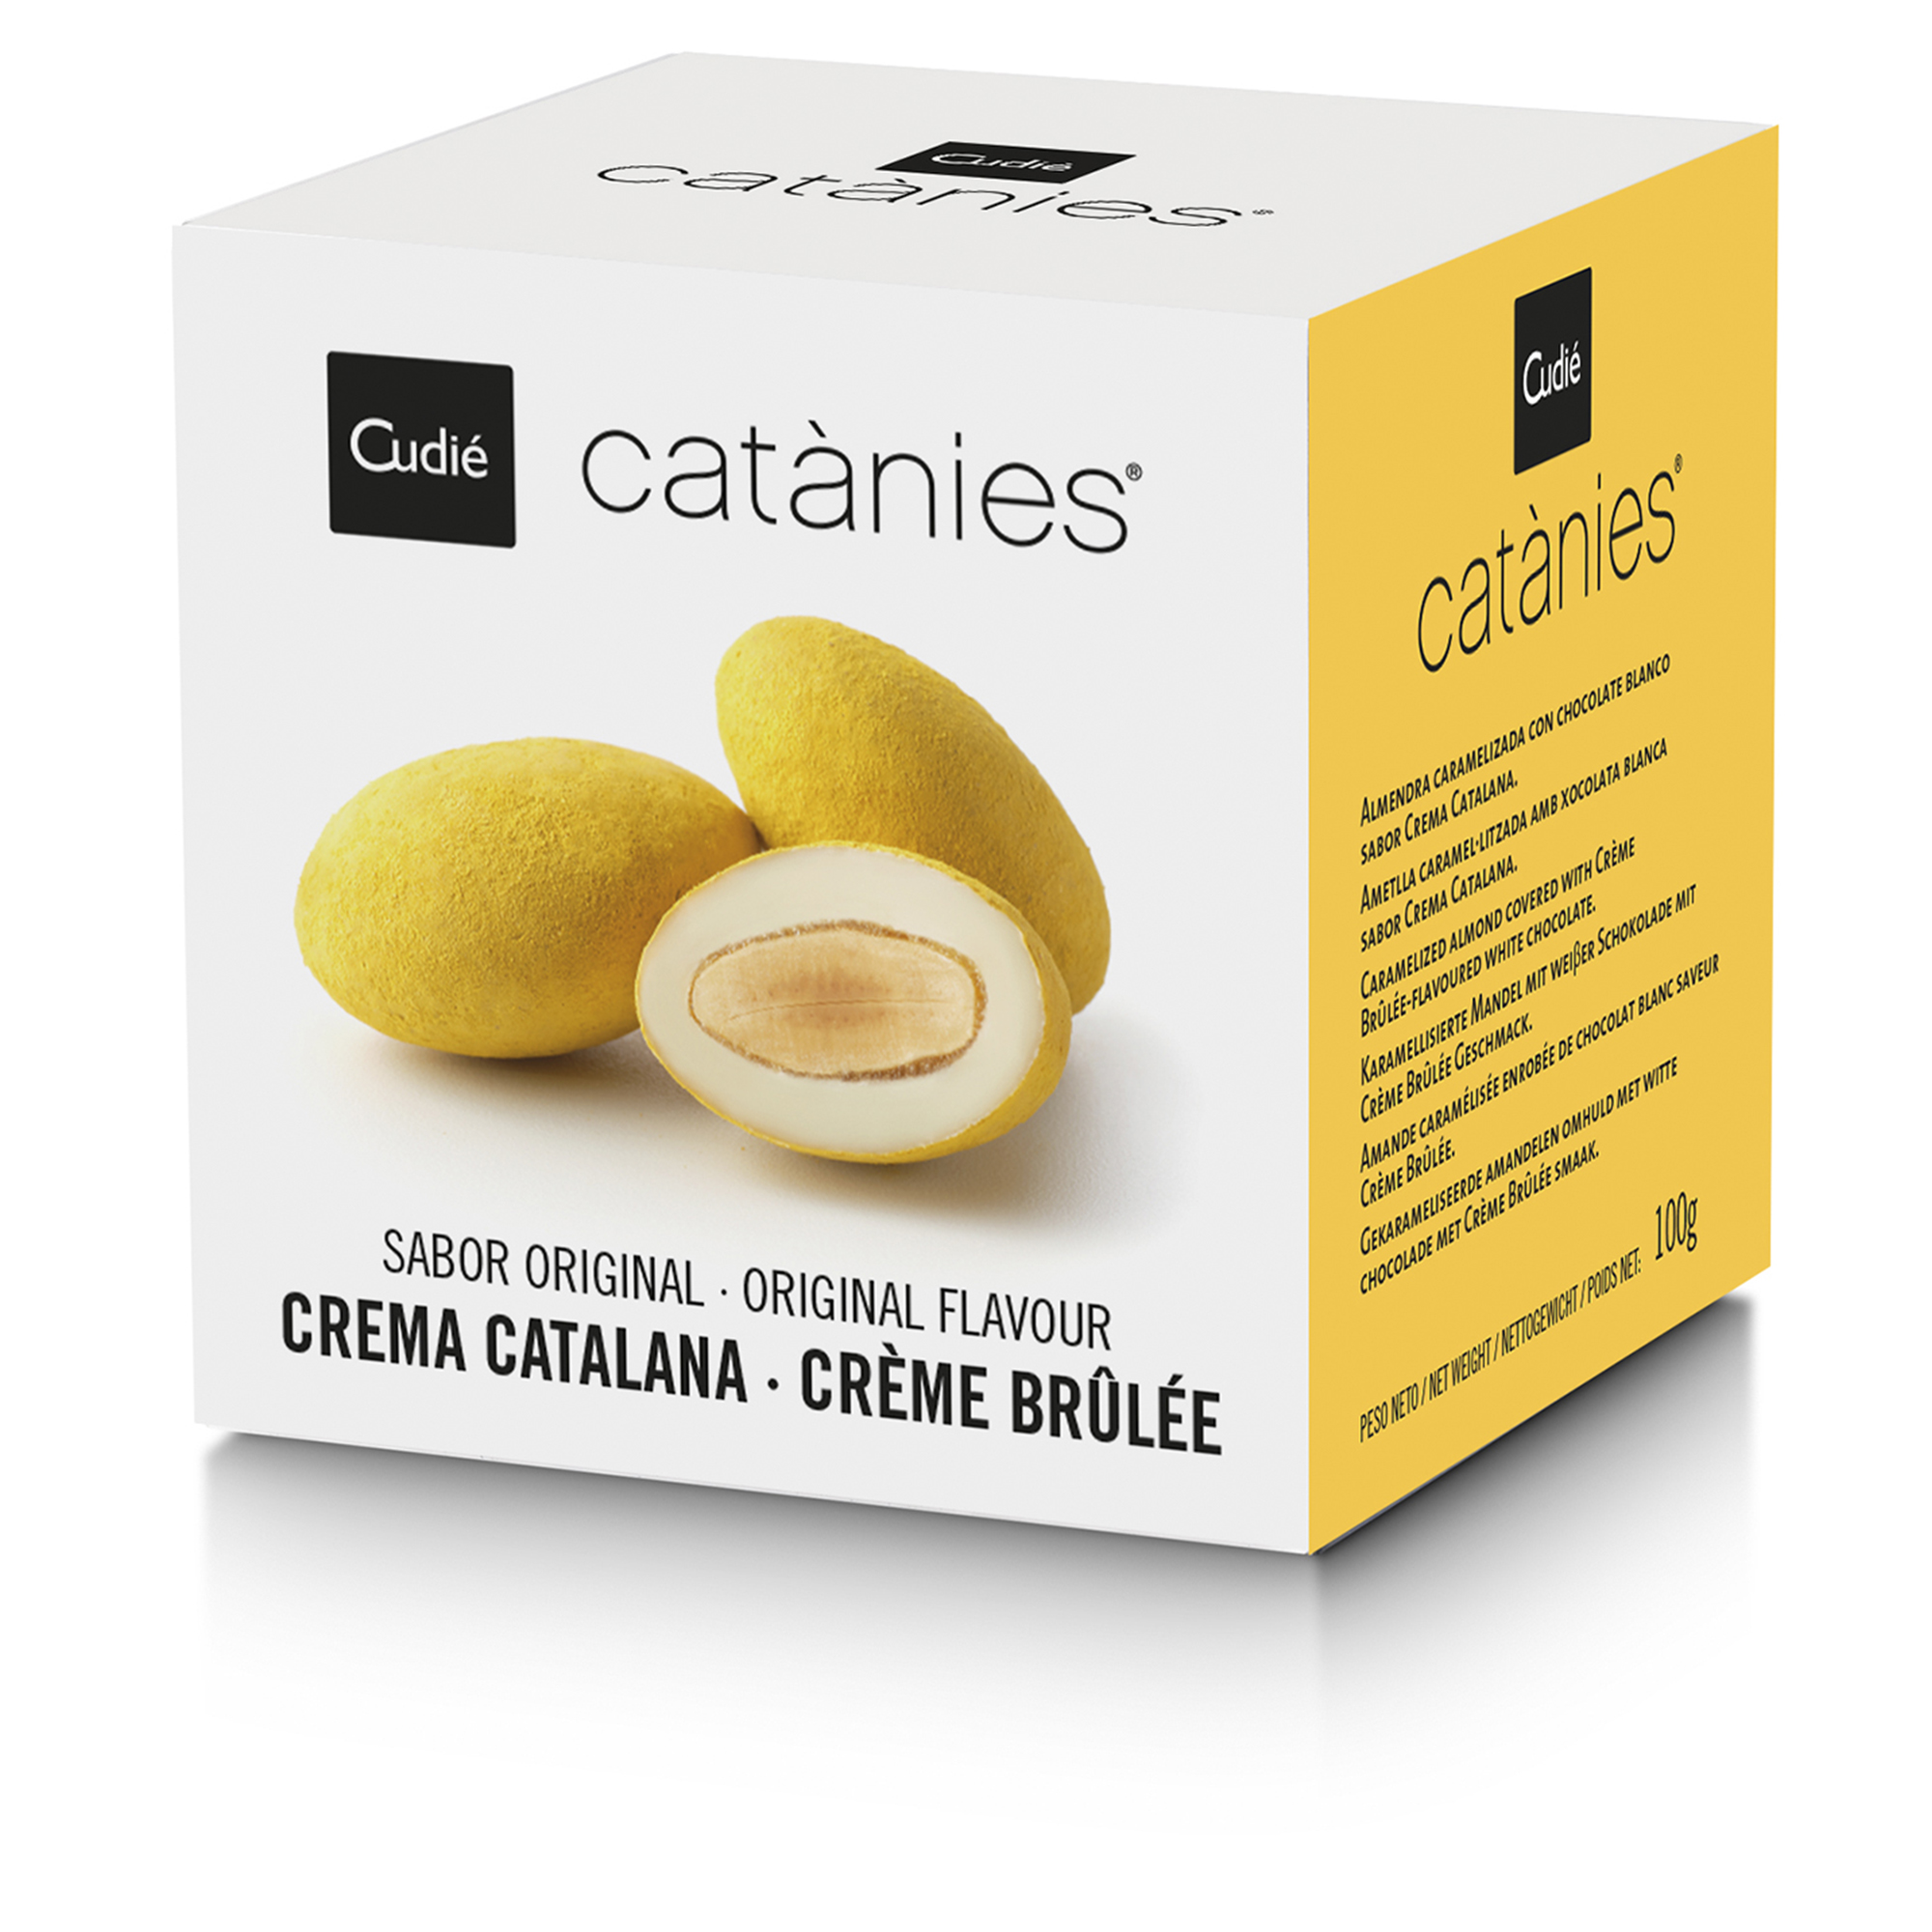 Cudié Catànies® Crème Brûlée